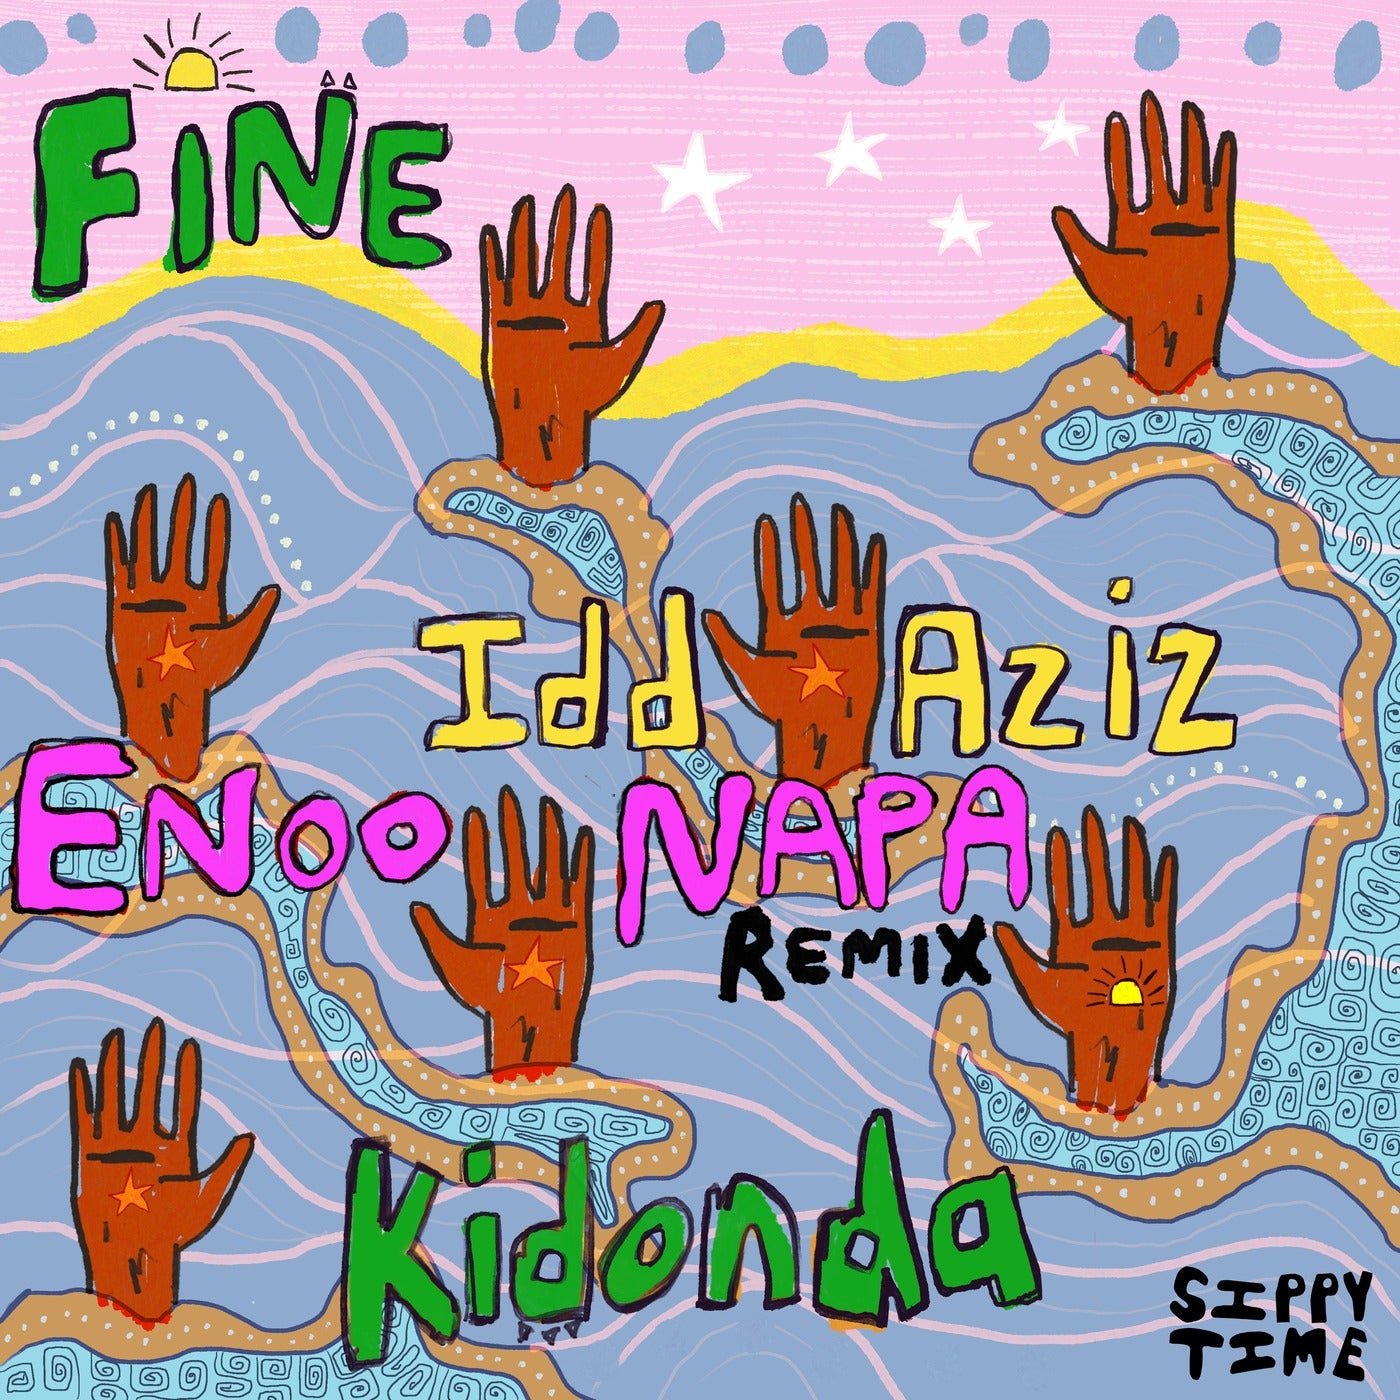 Release Cover: Kidonda (Enoo Napa Remix) Download Free on Electrobuzz